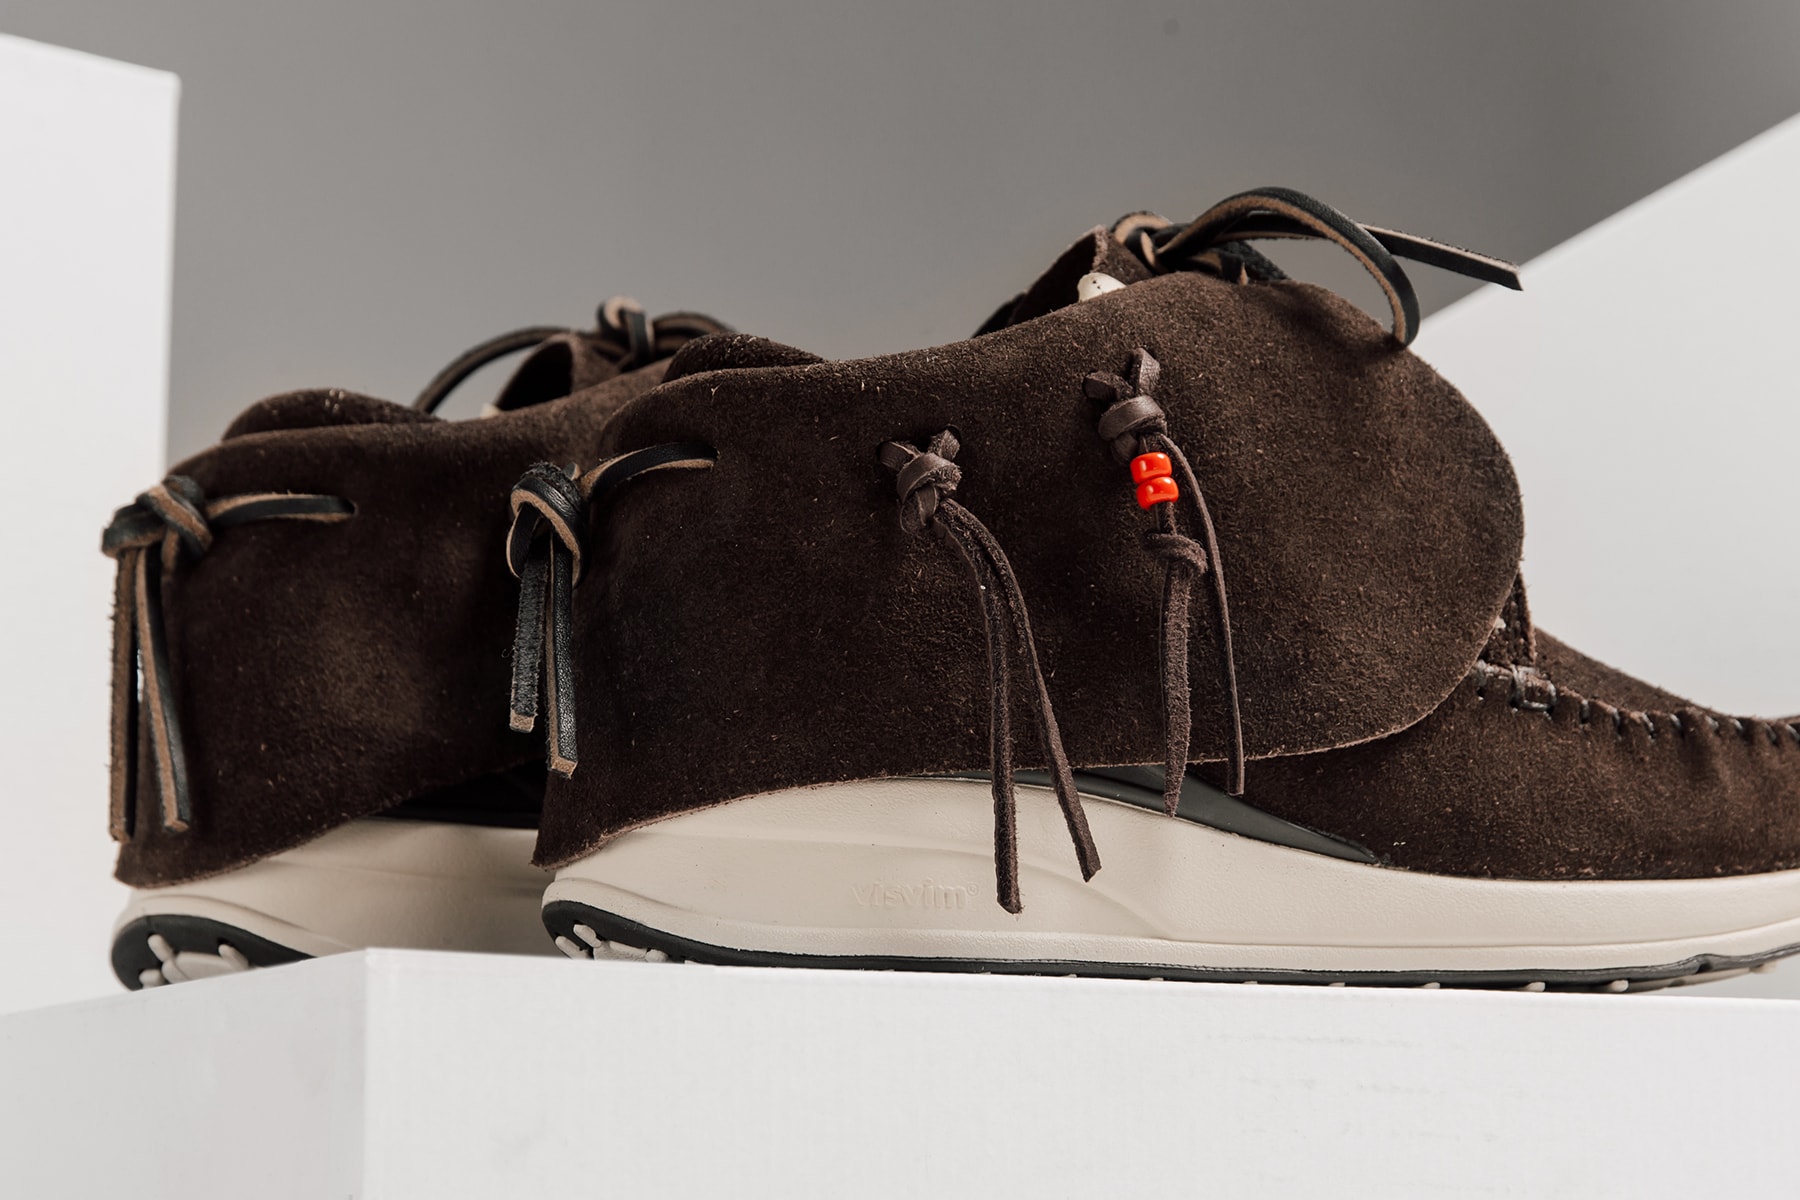 visvim FBT Veg Suede Collection release info black sand camel dark brown sneakers footwear